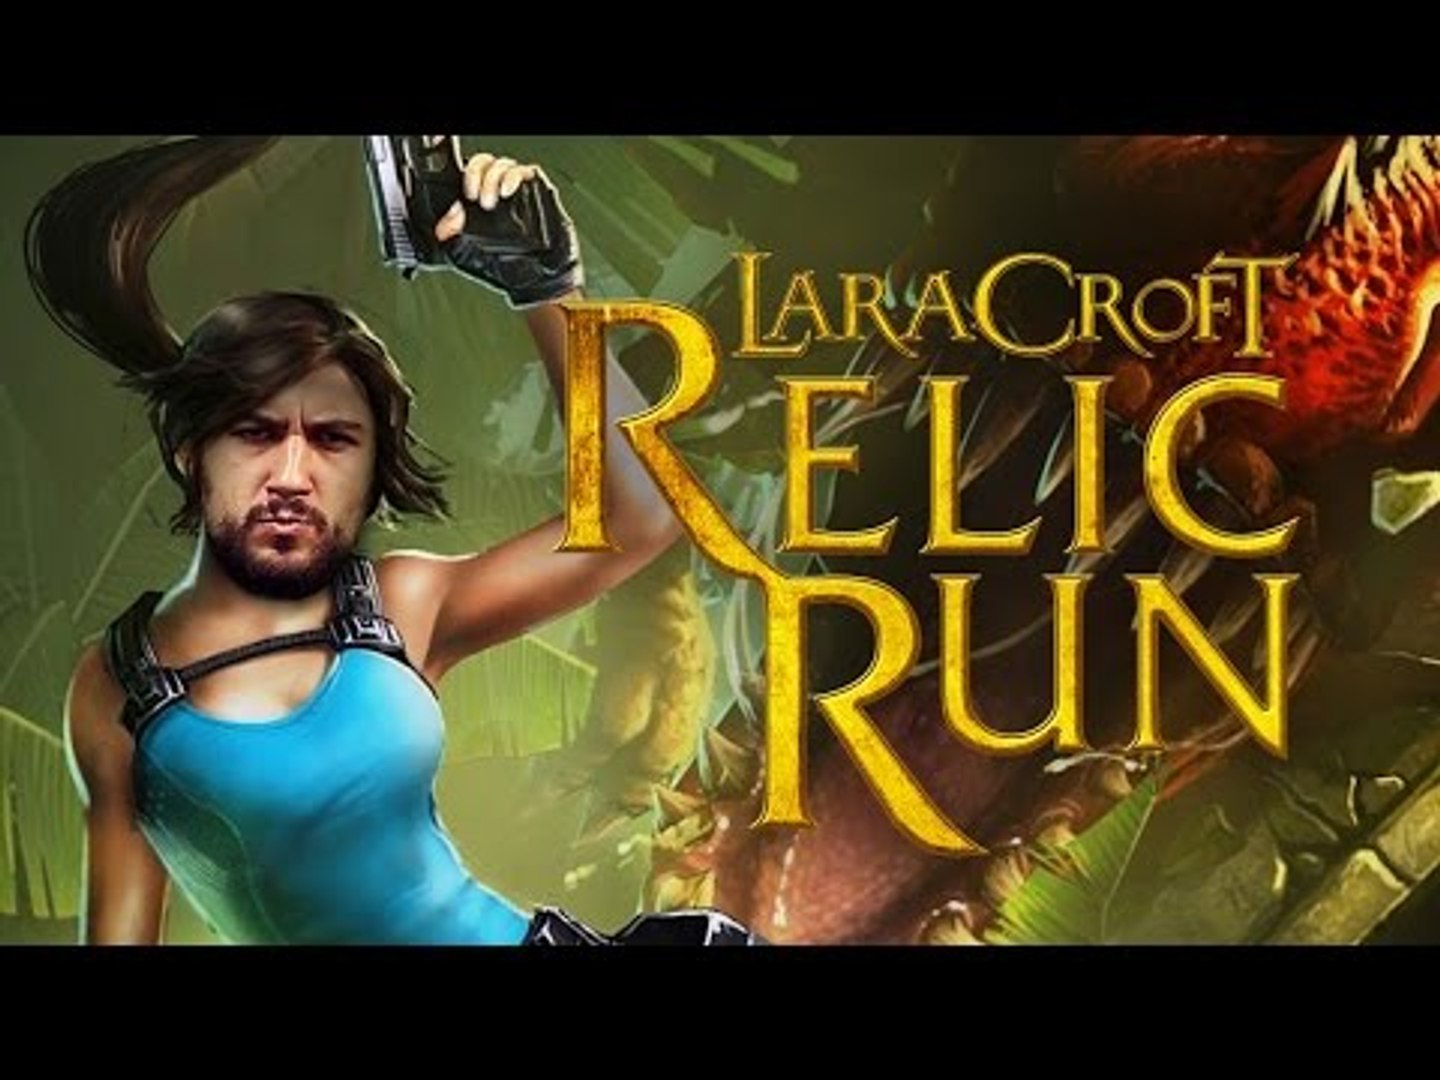 Lara Croft: Relic Run - Gameplay ao vivo às 16h30! - video Dailymotion